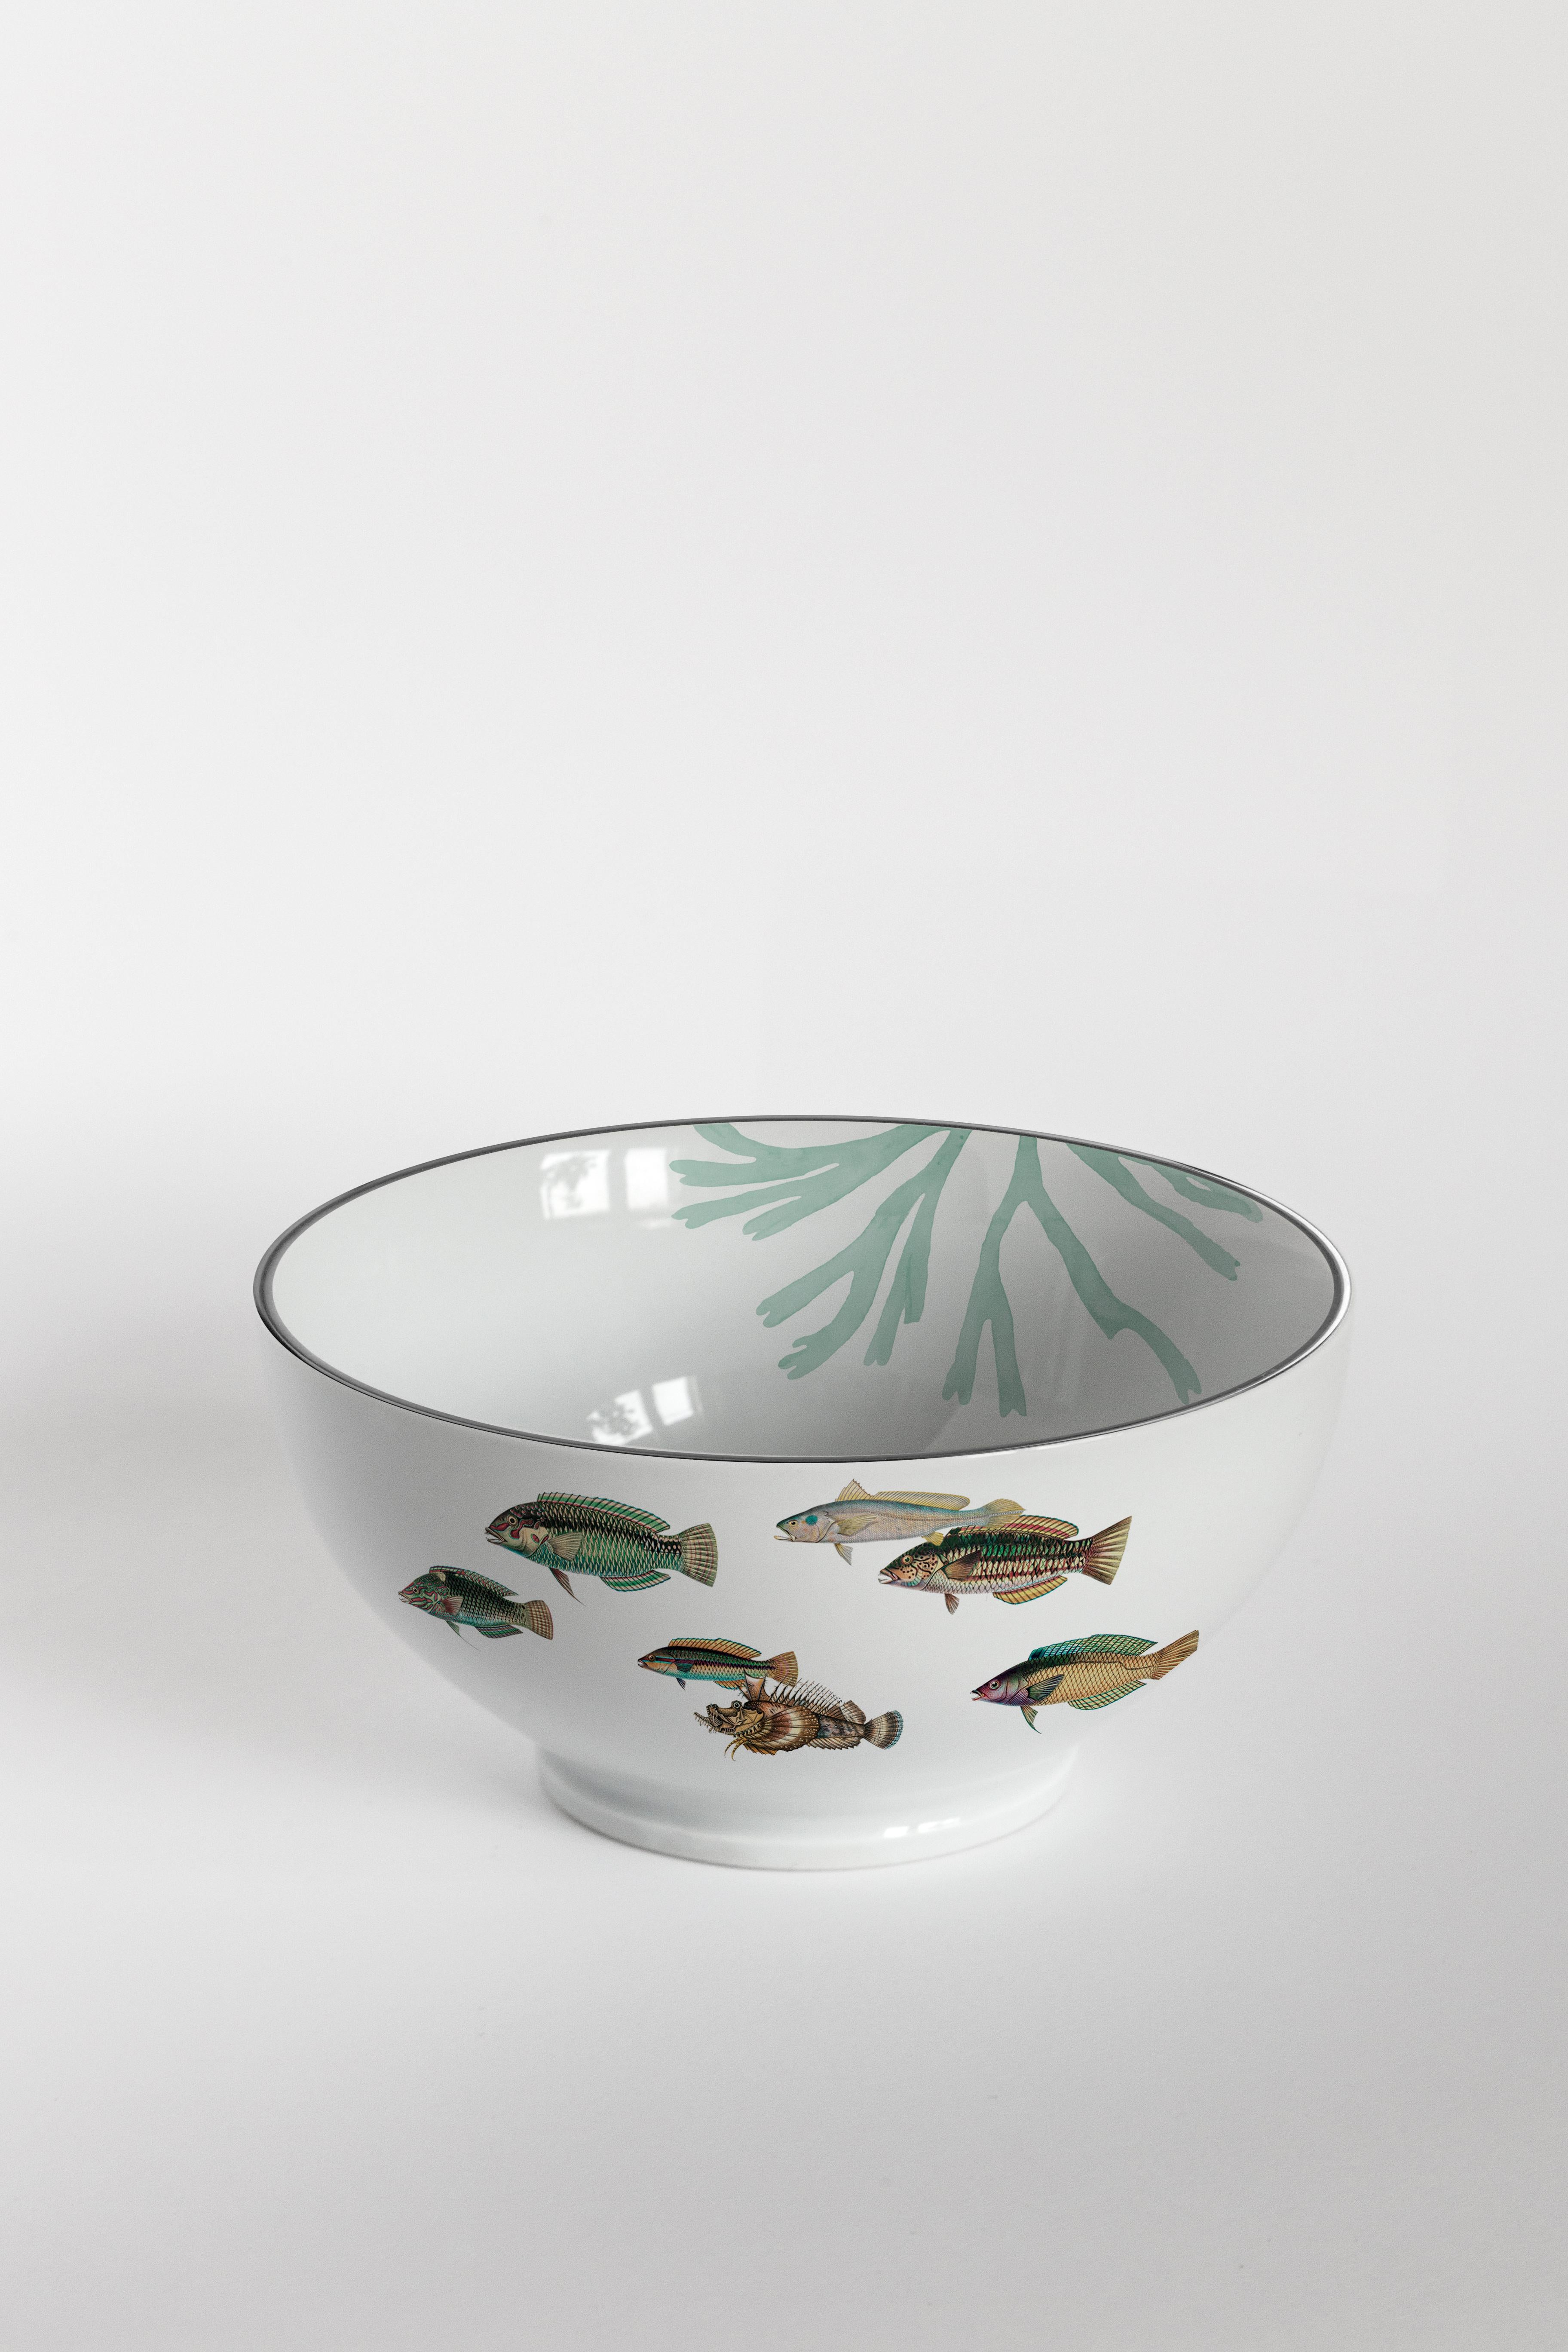 Amami, Six Contemporary Porcelain Bowls with Decorative Design For Sale 2